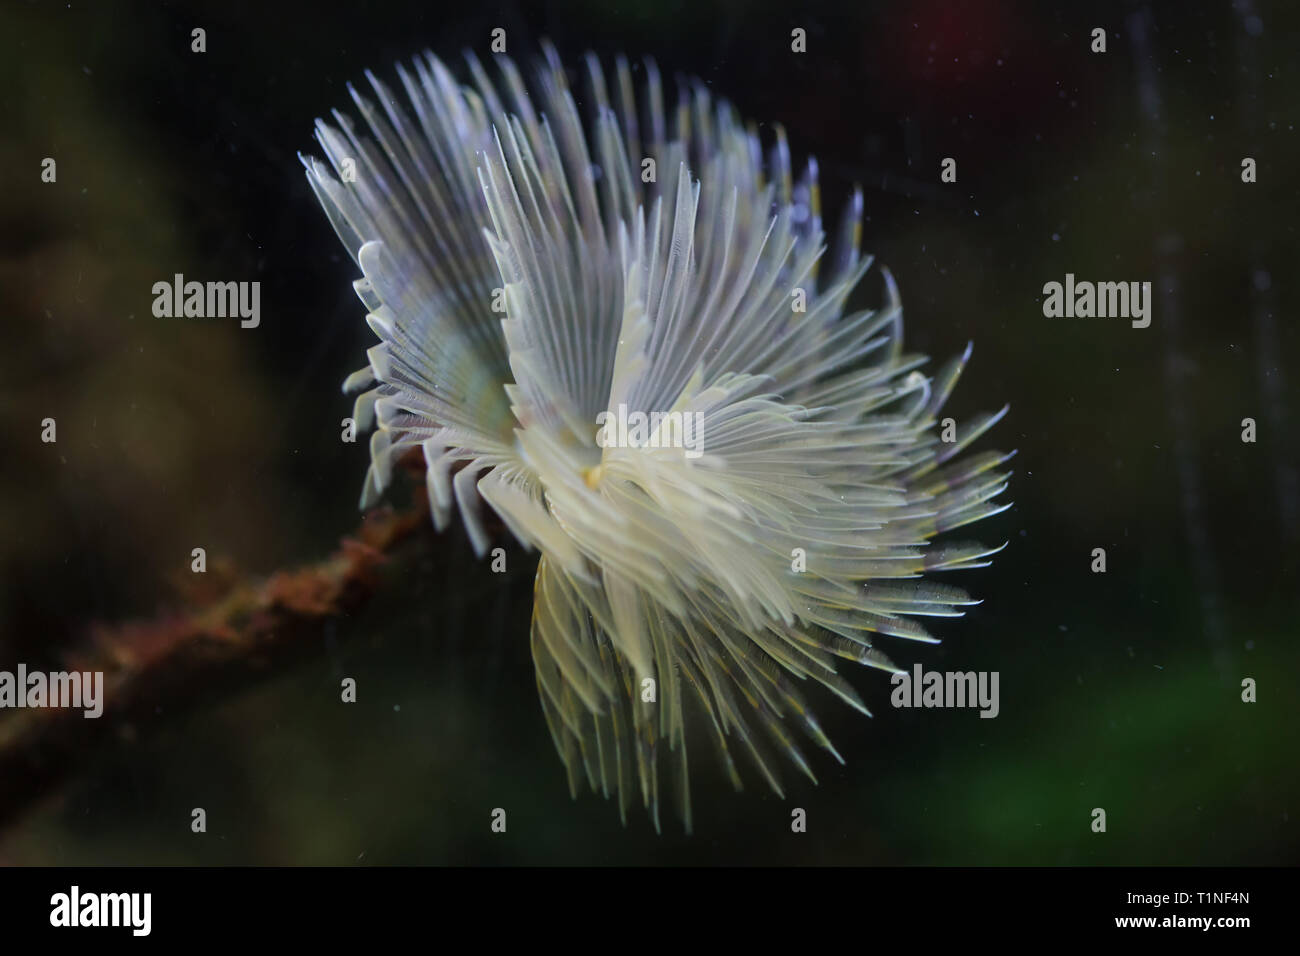 Mediterranean fanworm (Sabella spallanzanii), also known as the feather duster worm. Stock Photo